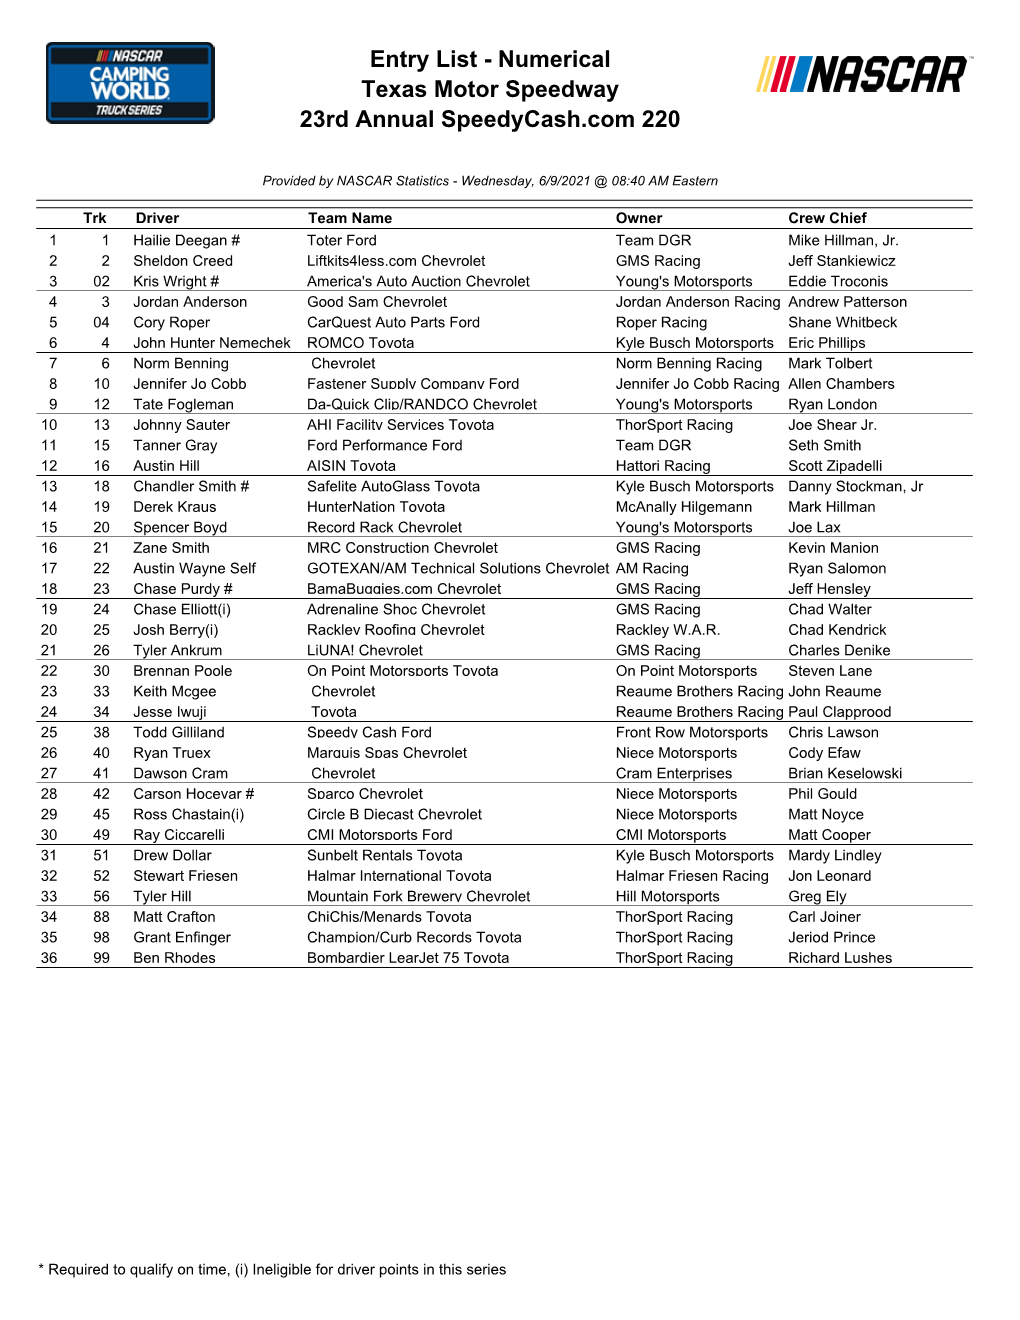 Entry List - Numerical Texas Motor Speedway 23Rd Annual Speedycash.Com 220